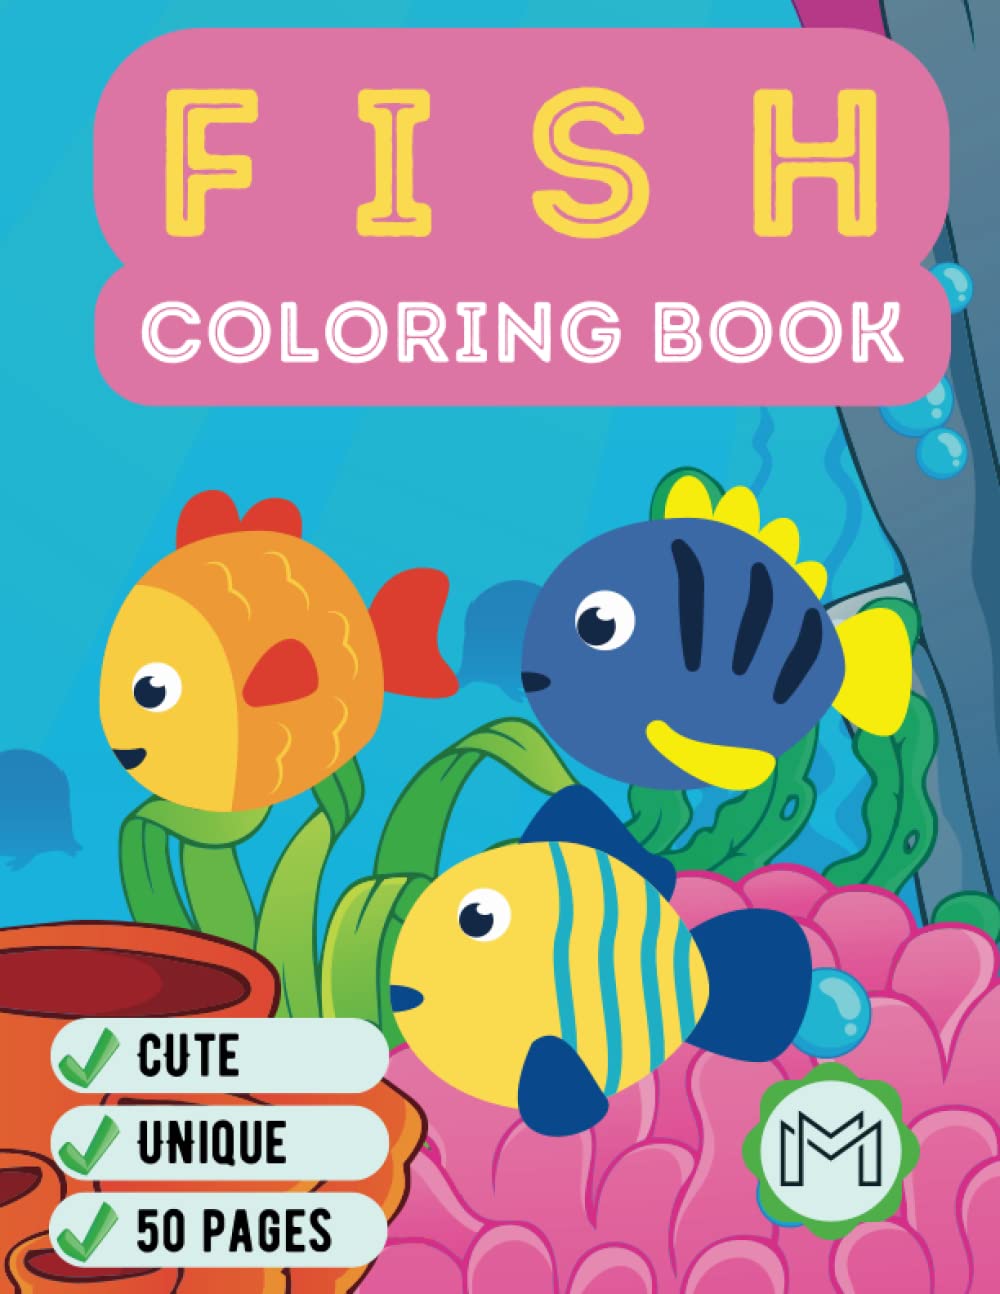 Adult coloring book bundle sea, fish, animals, beach, nature